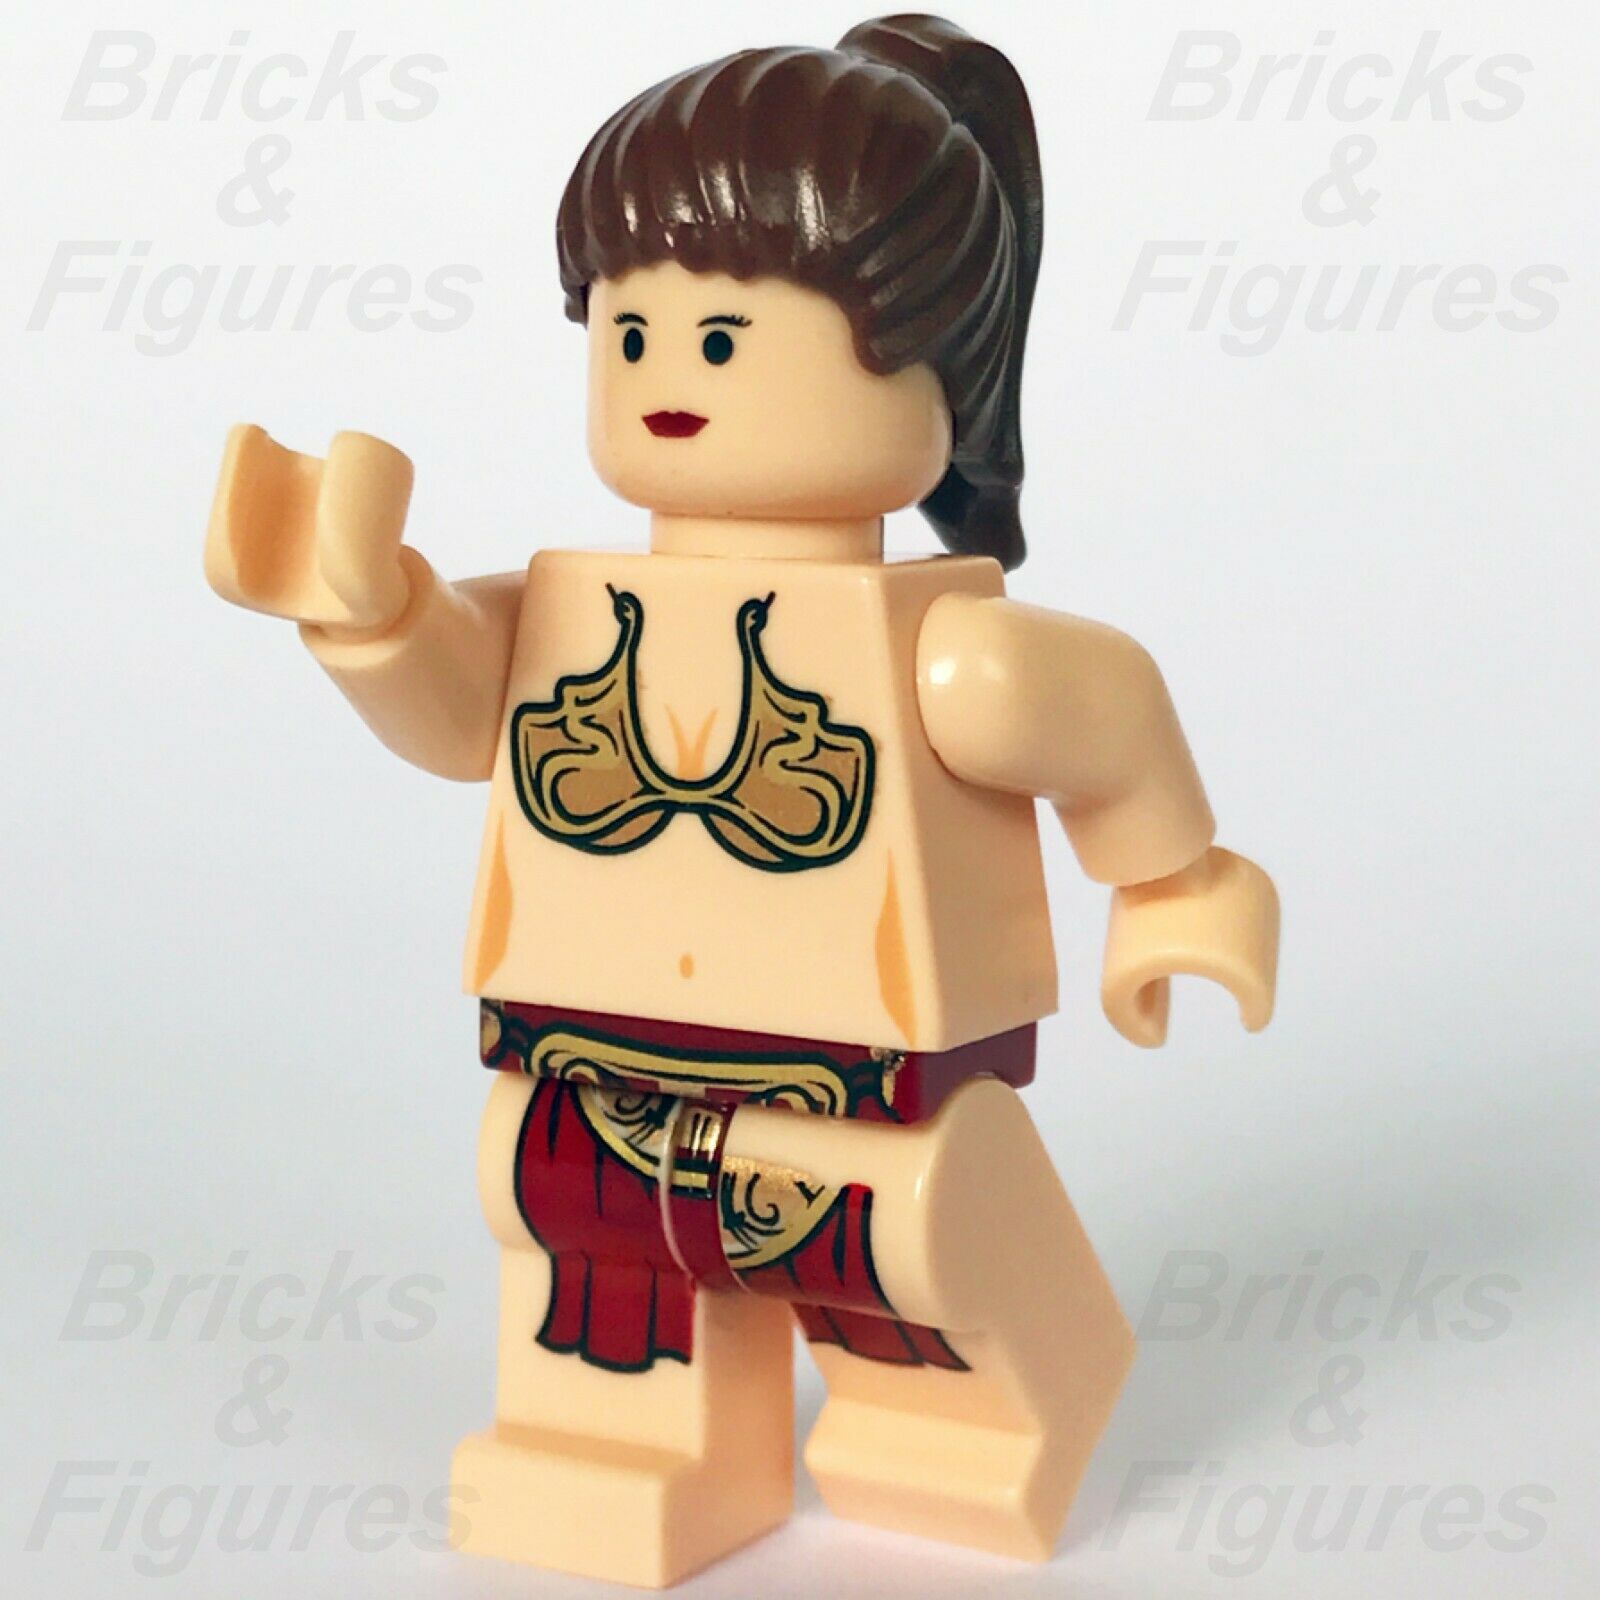 New Star Wars LEGO Princess Leia Jabba the Hutt Slave Outfit Minifigure 852552 - Bricks & Figures